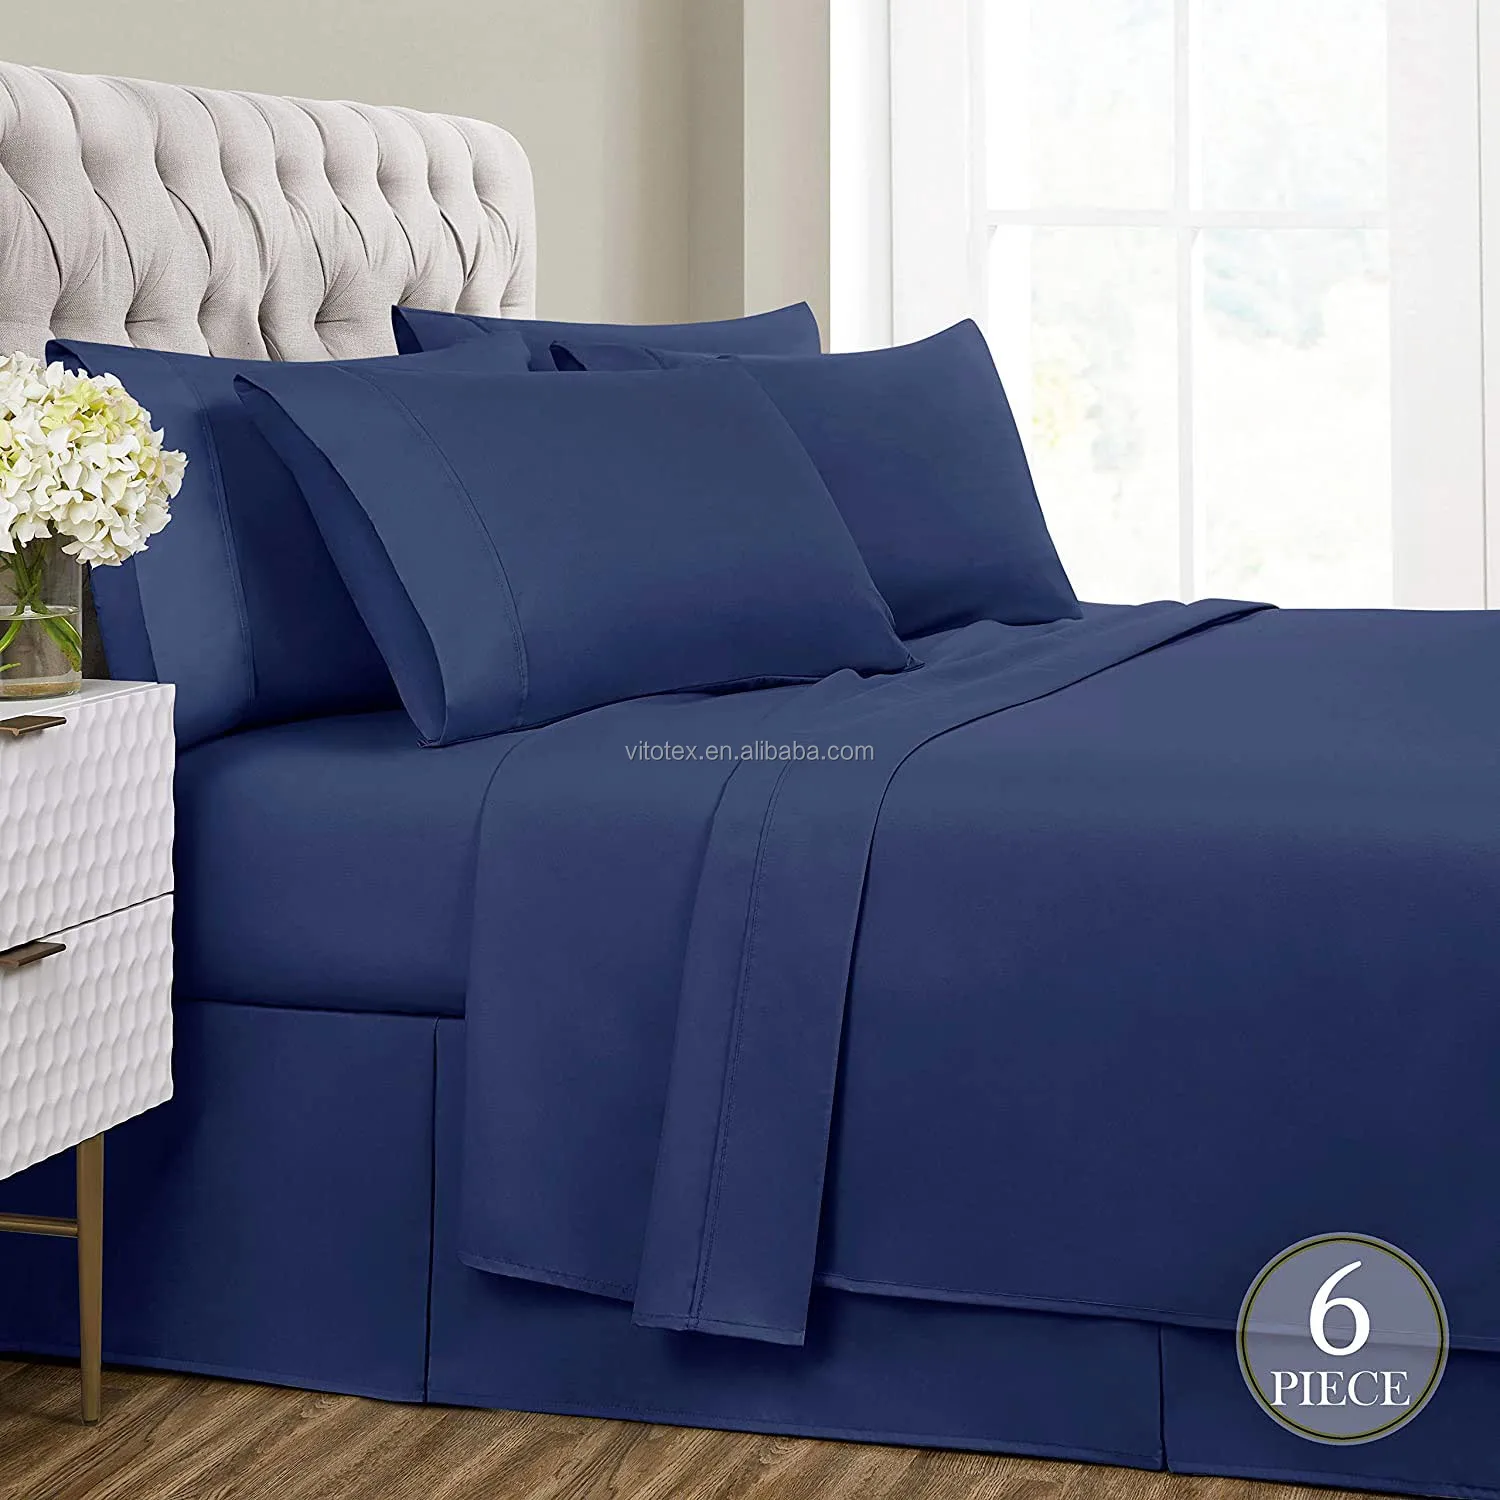 Hypoallergenic 6 Piece Premium Bed Sheets Set Wrinkle & Fade Resistant 